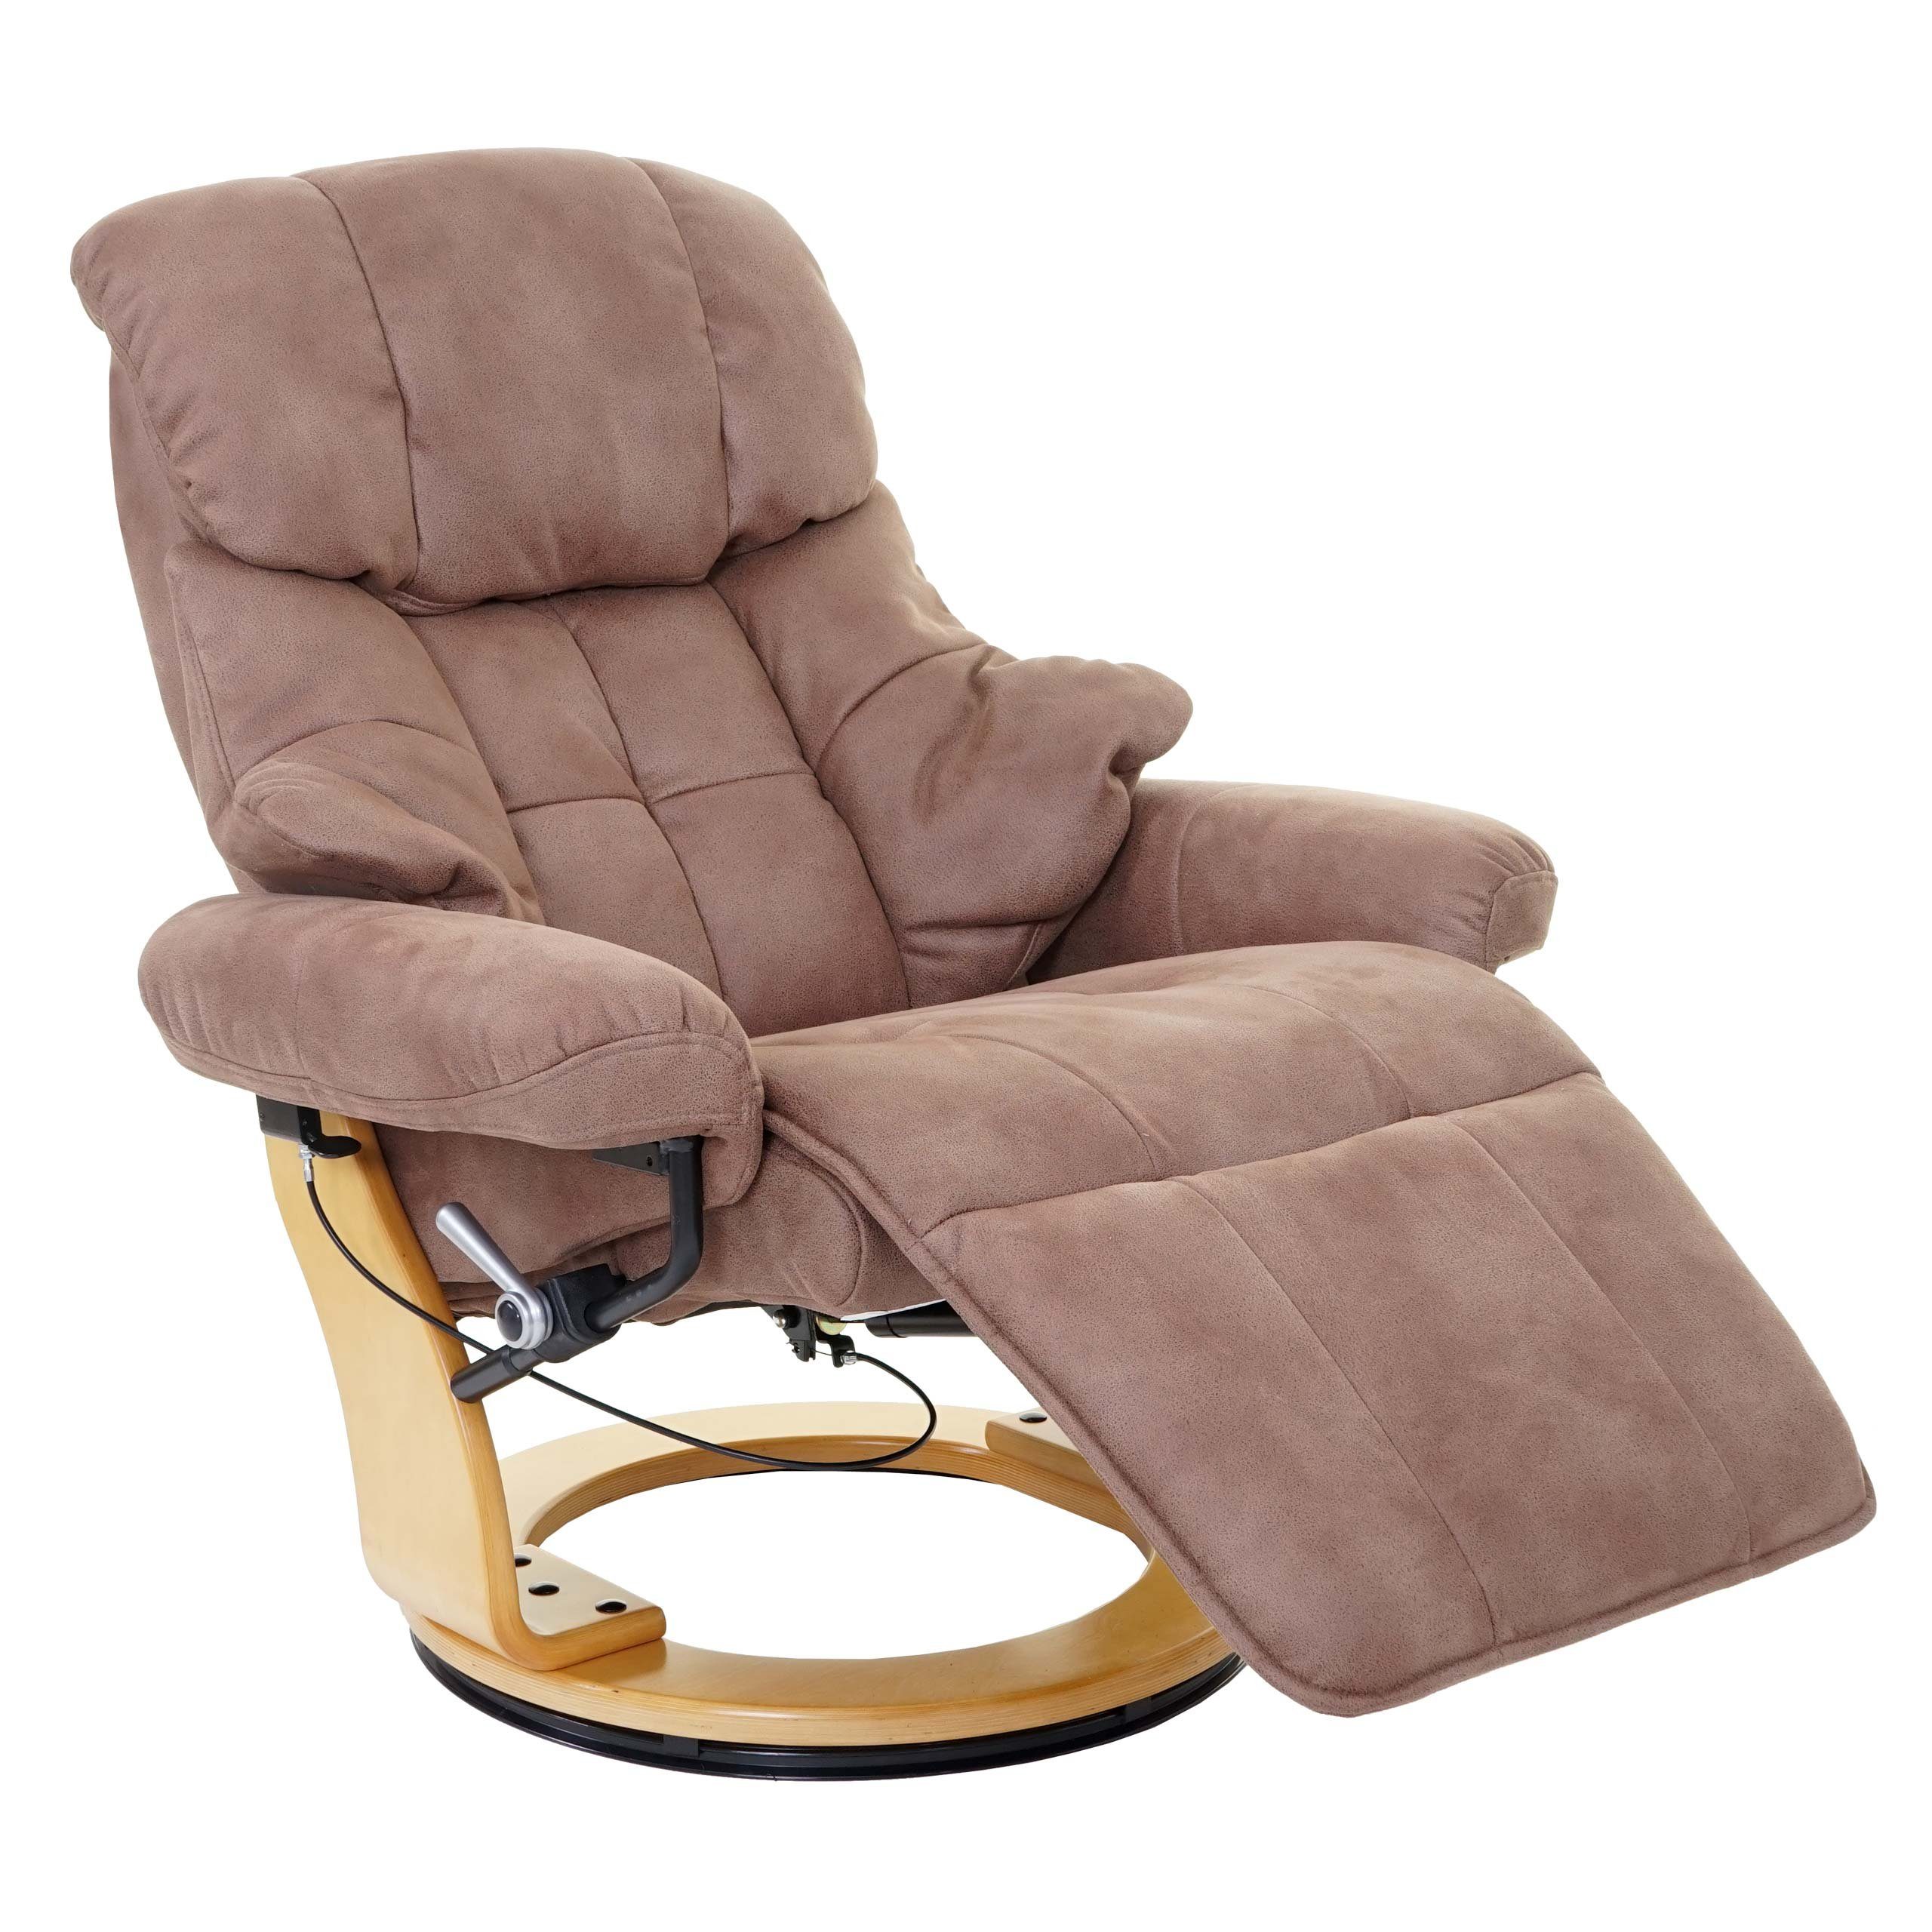 MCA furniture Relaxsessel Windsor 2-S, Fußstütze und Rückenlehne separat verstellbar, extradicke Polsterung antikbraun, naturbraun